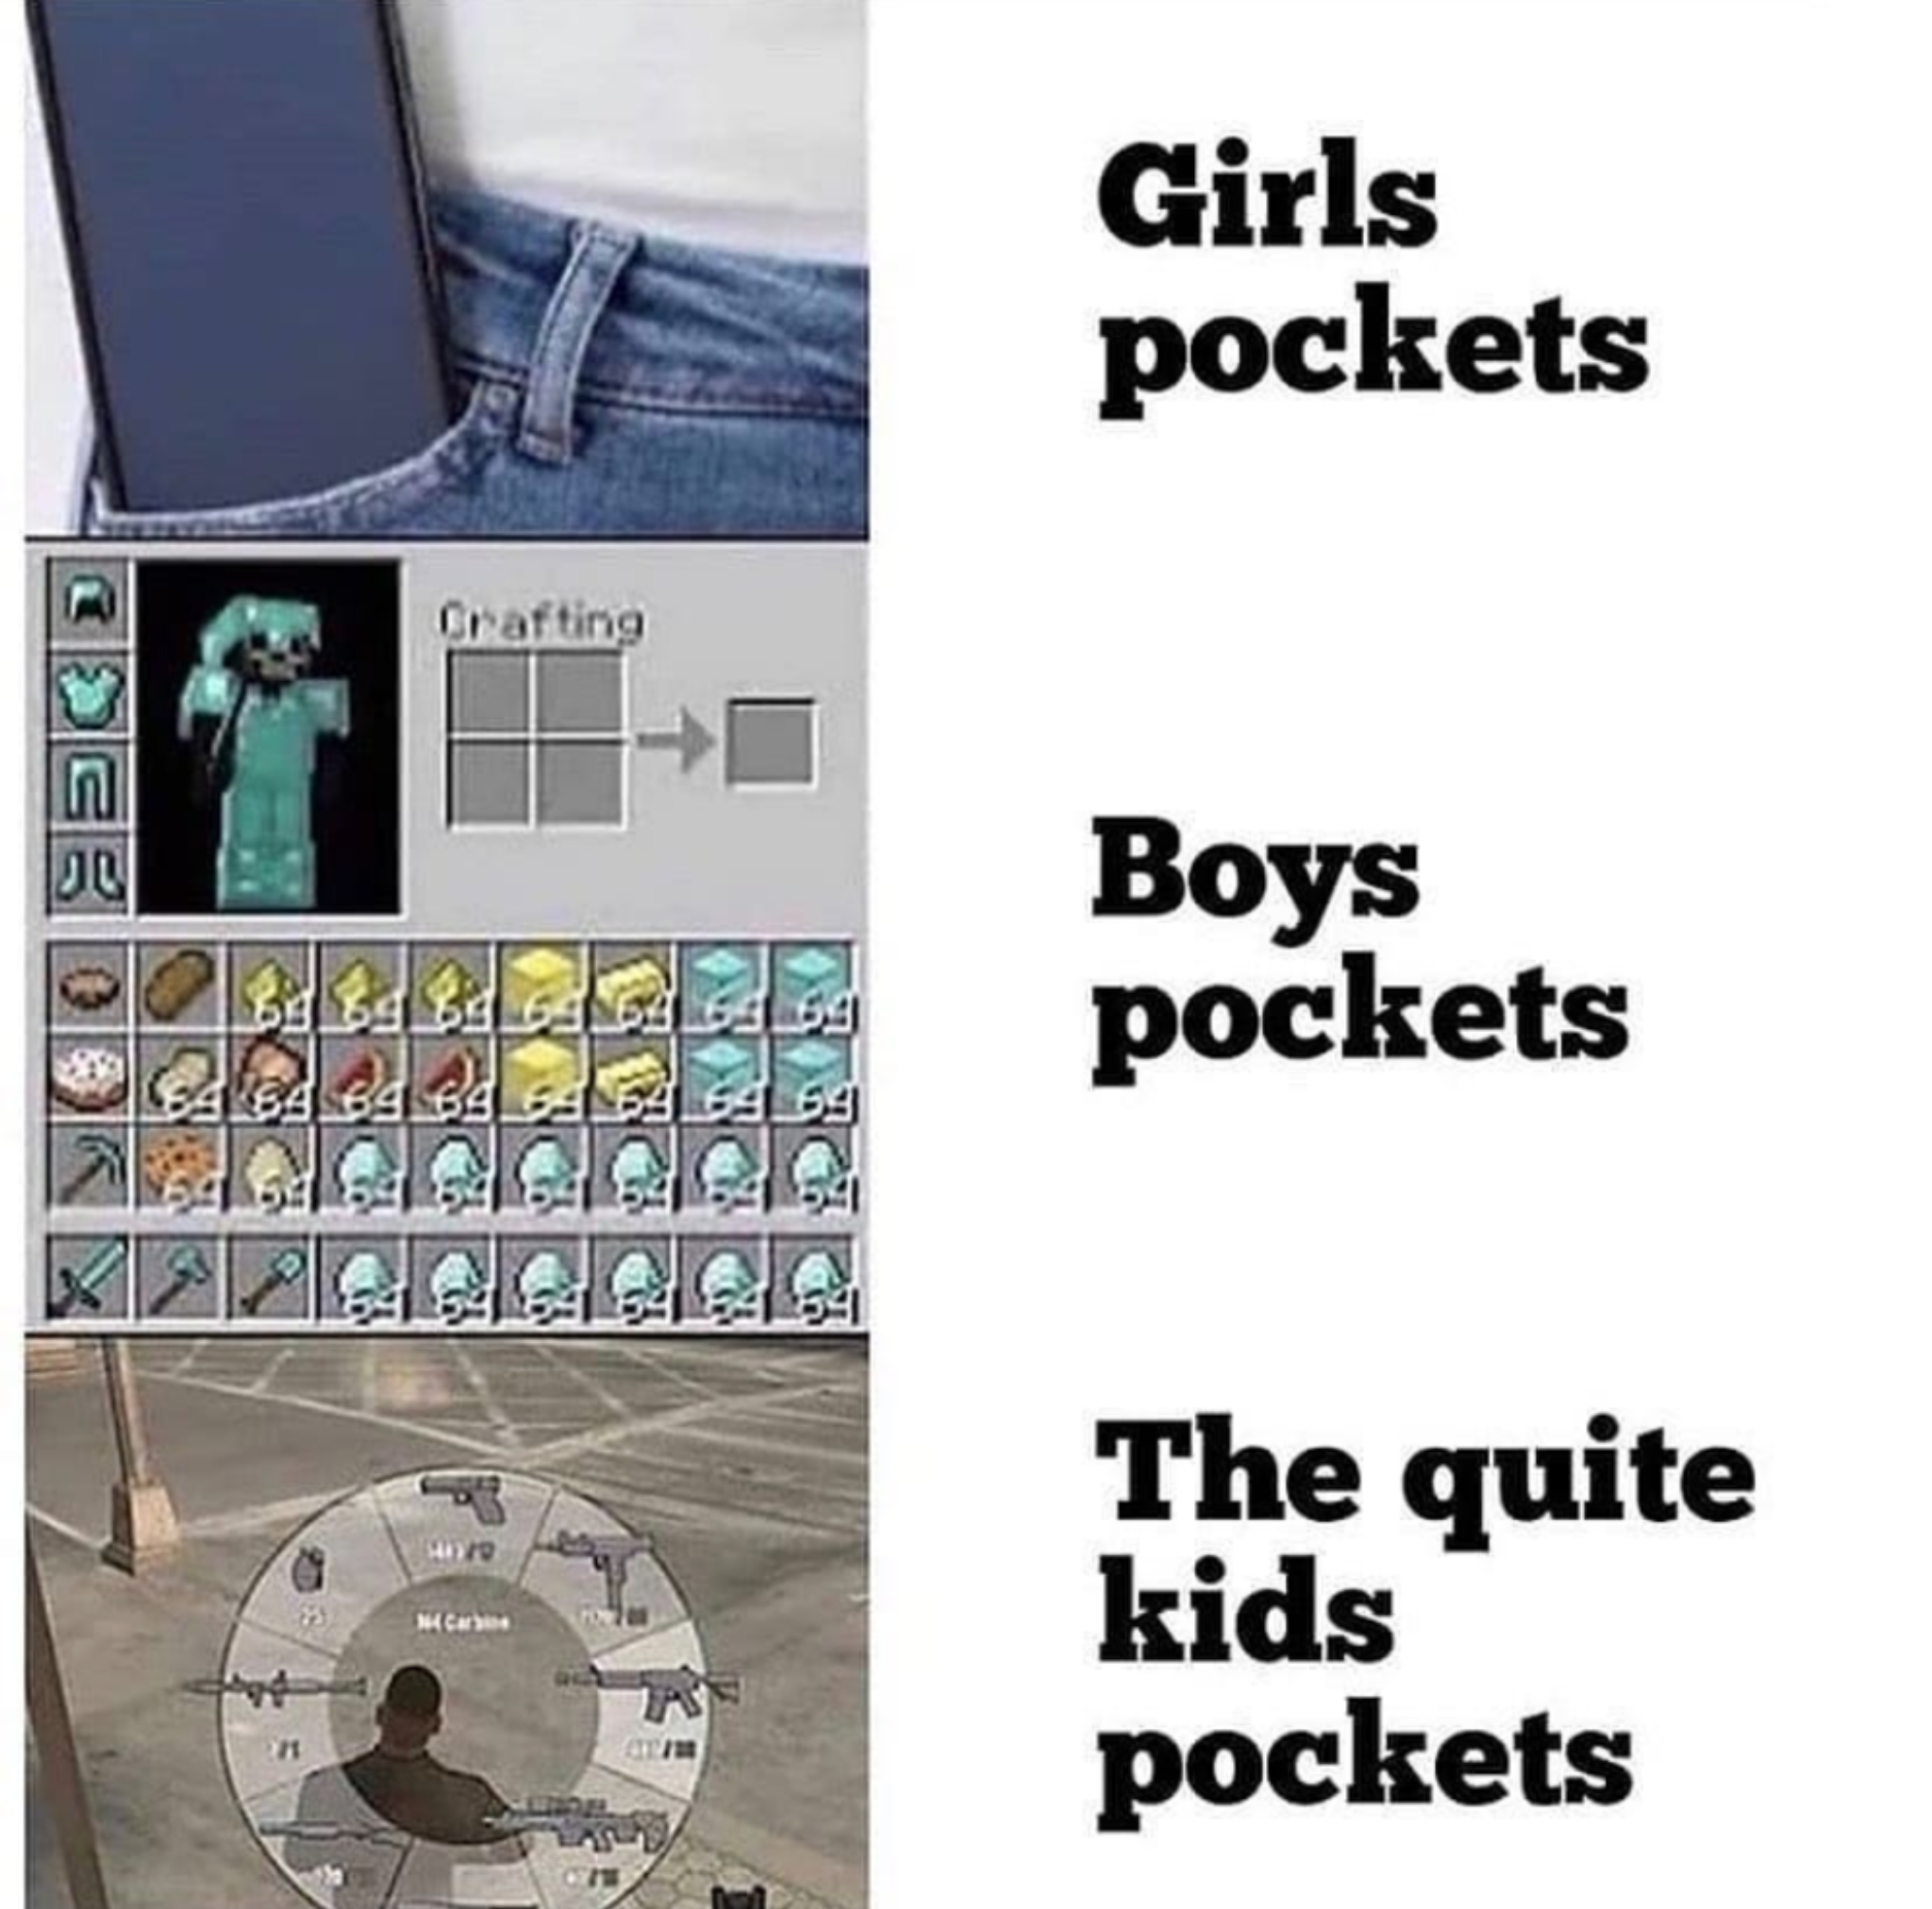 minecraft inventory - Girls pockets Crafting Ek Boys pockets 68 69 The quite kids pockets